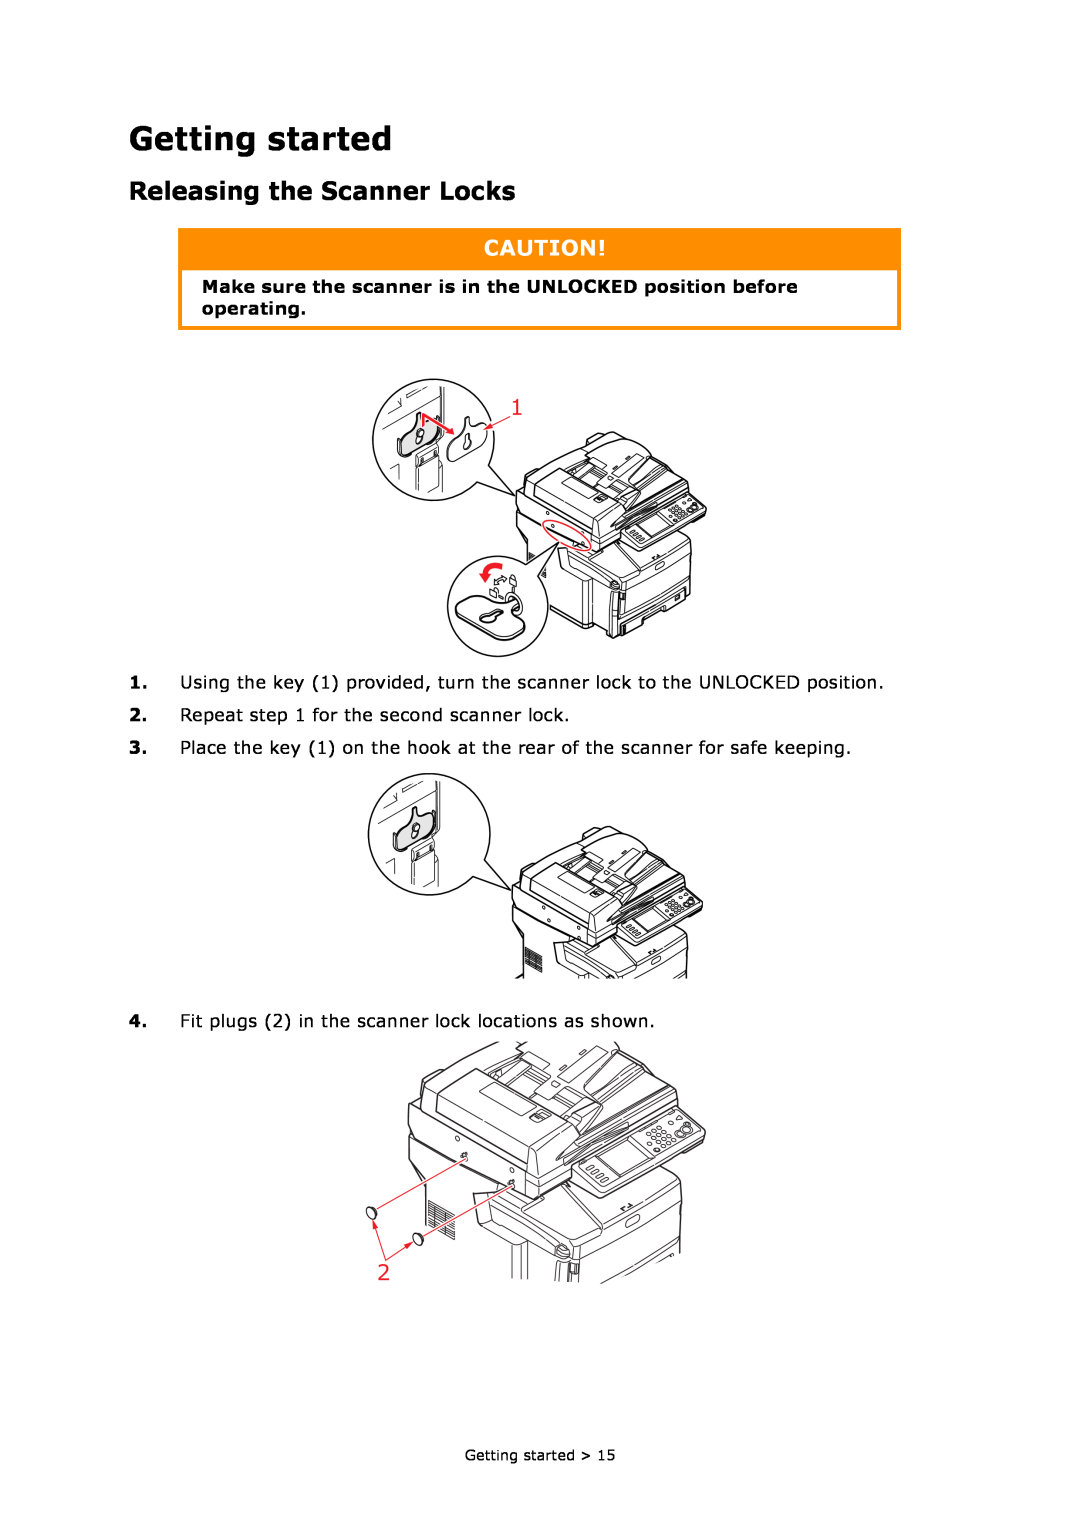 Oki MC860n MFP manual Getting started, Releasing the Scanner Locks 